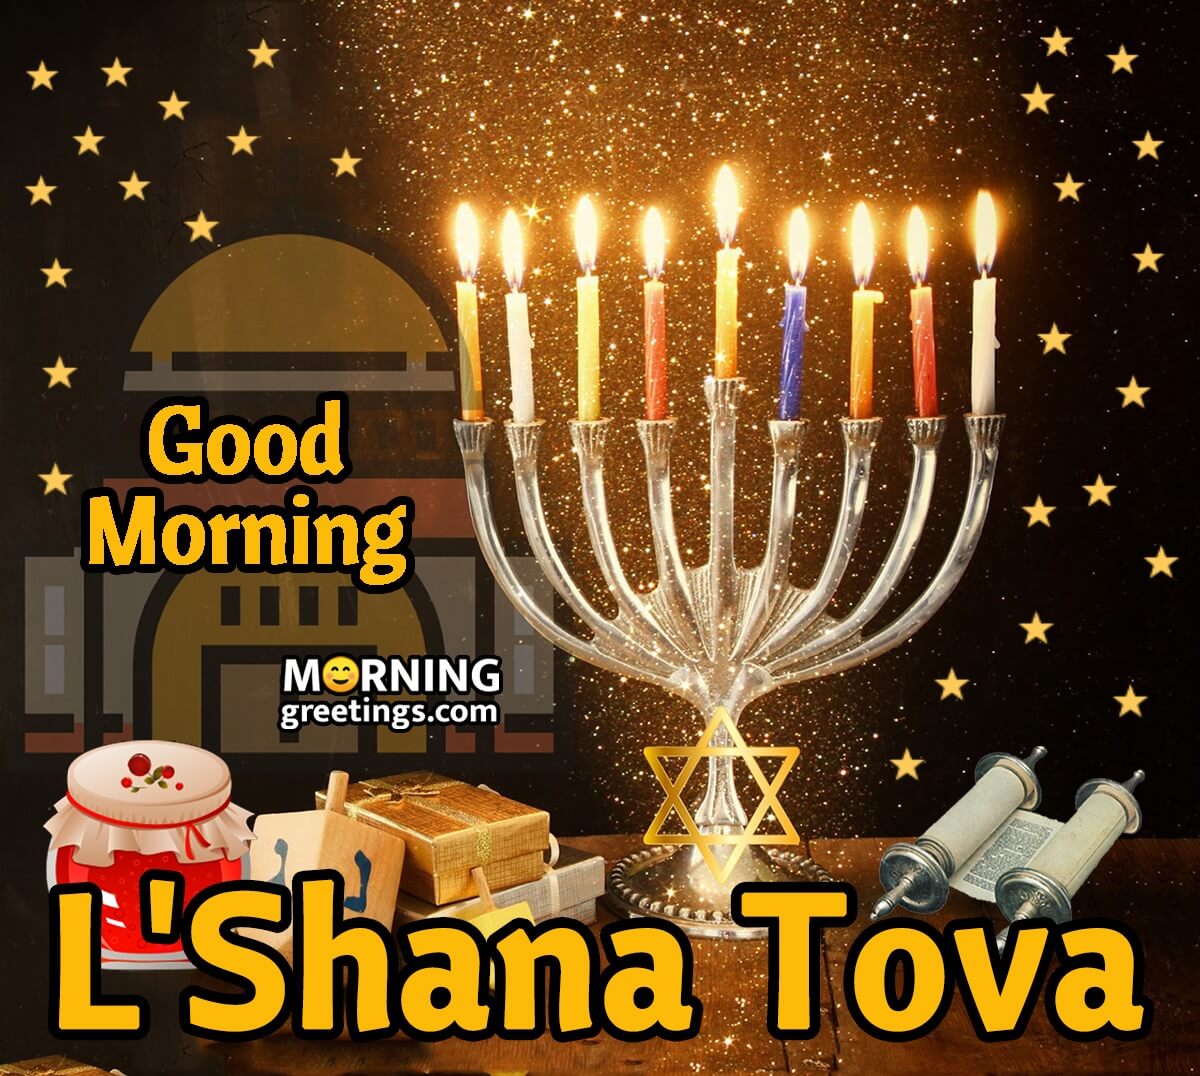 Good Morning L'shana Tova